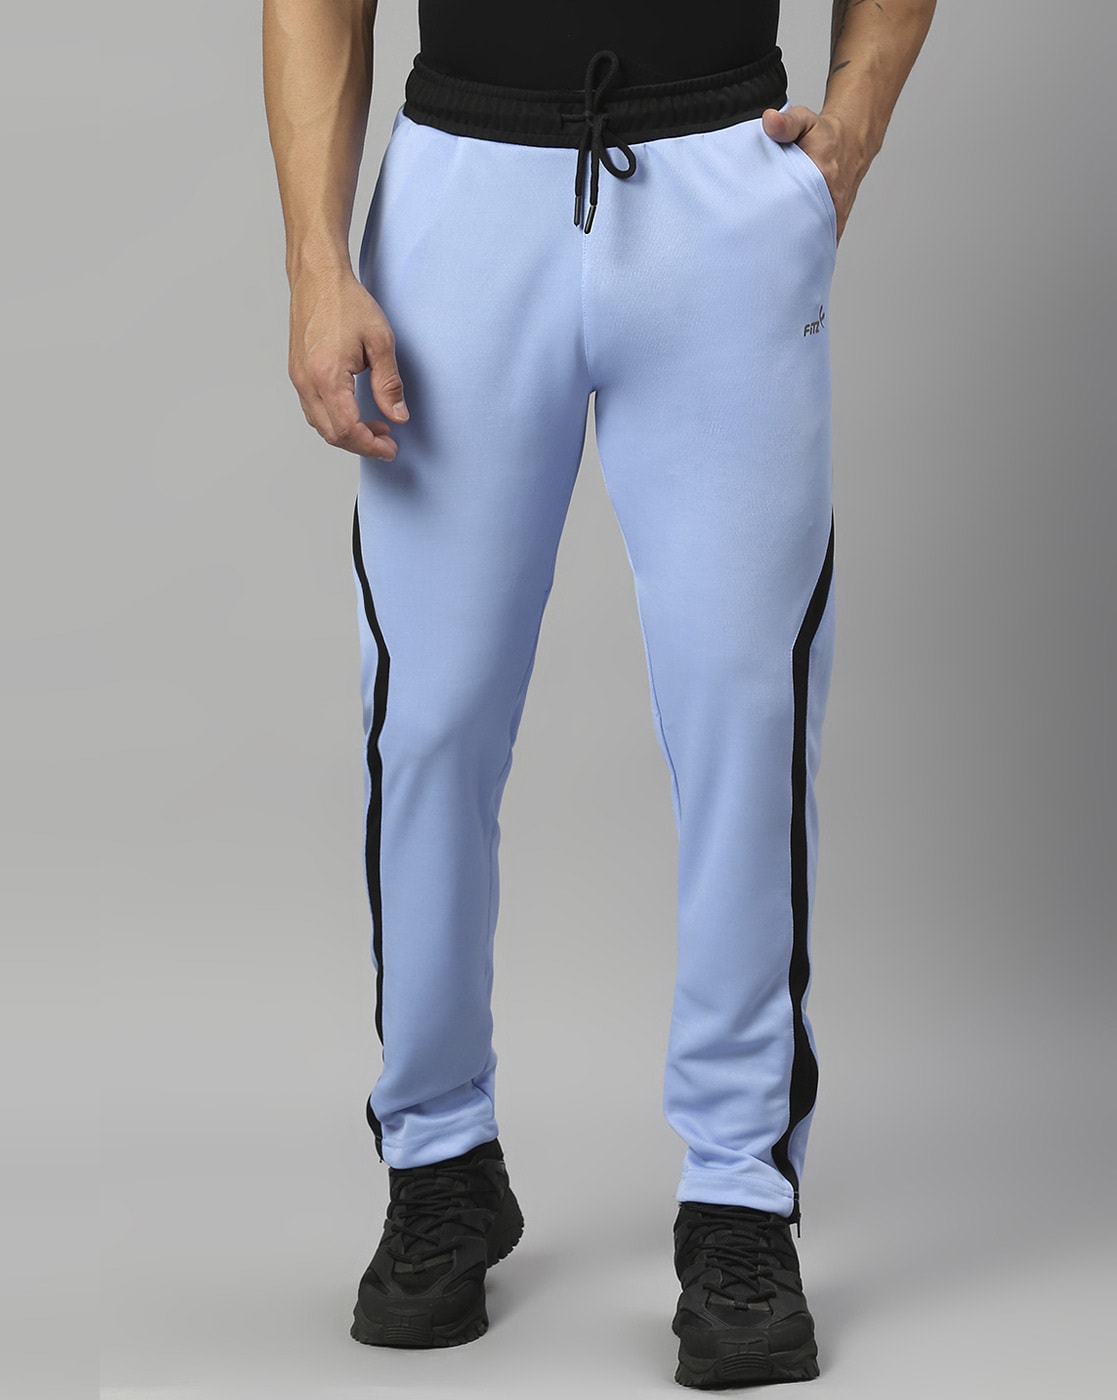 Buy Blue Track Pants for Men by ALLEN SOLLY Online | Ajio.com